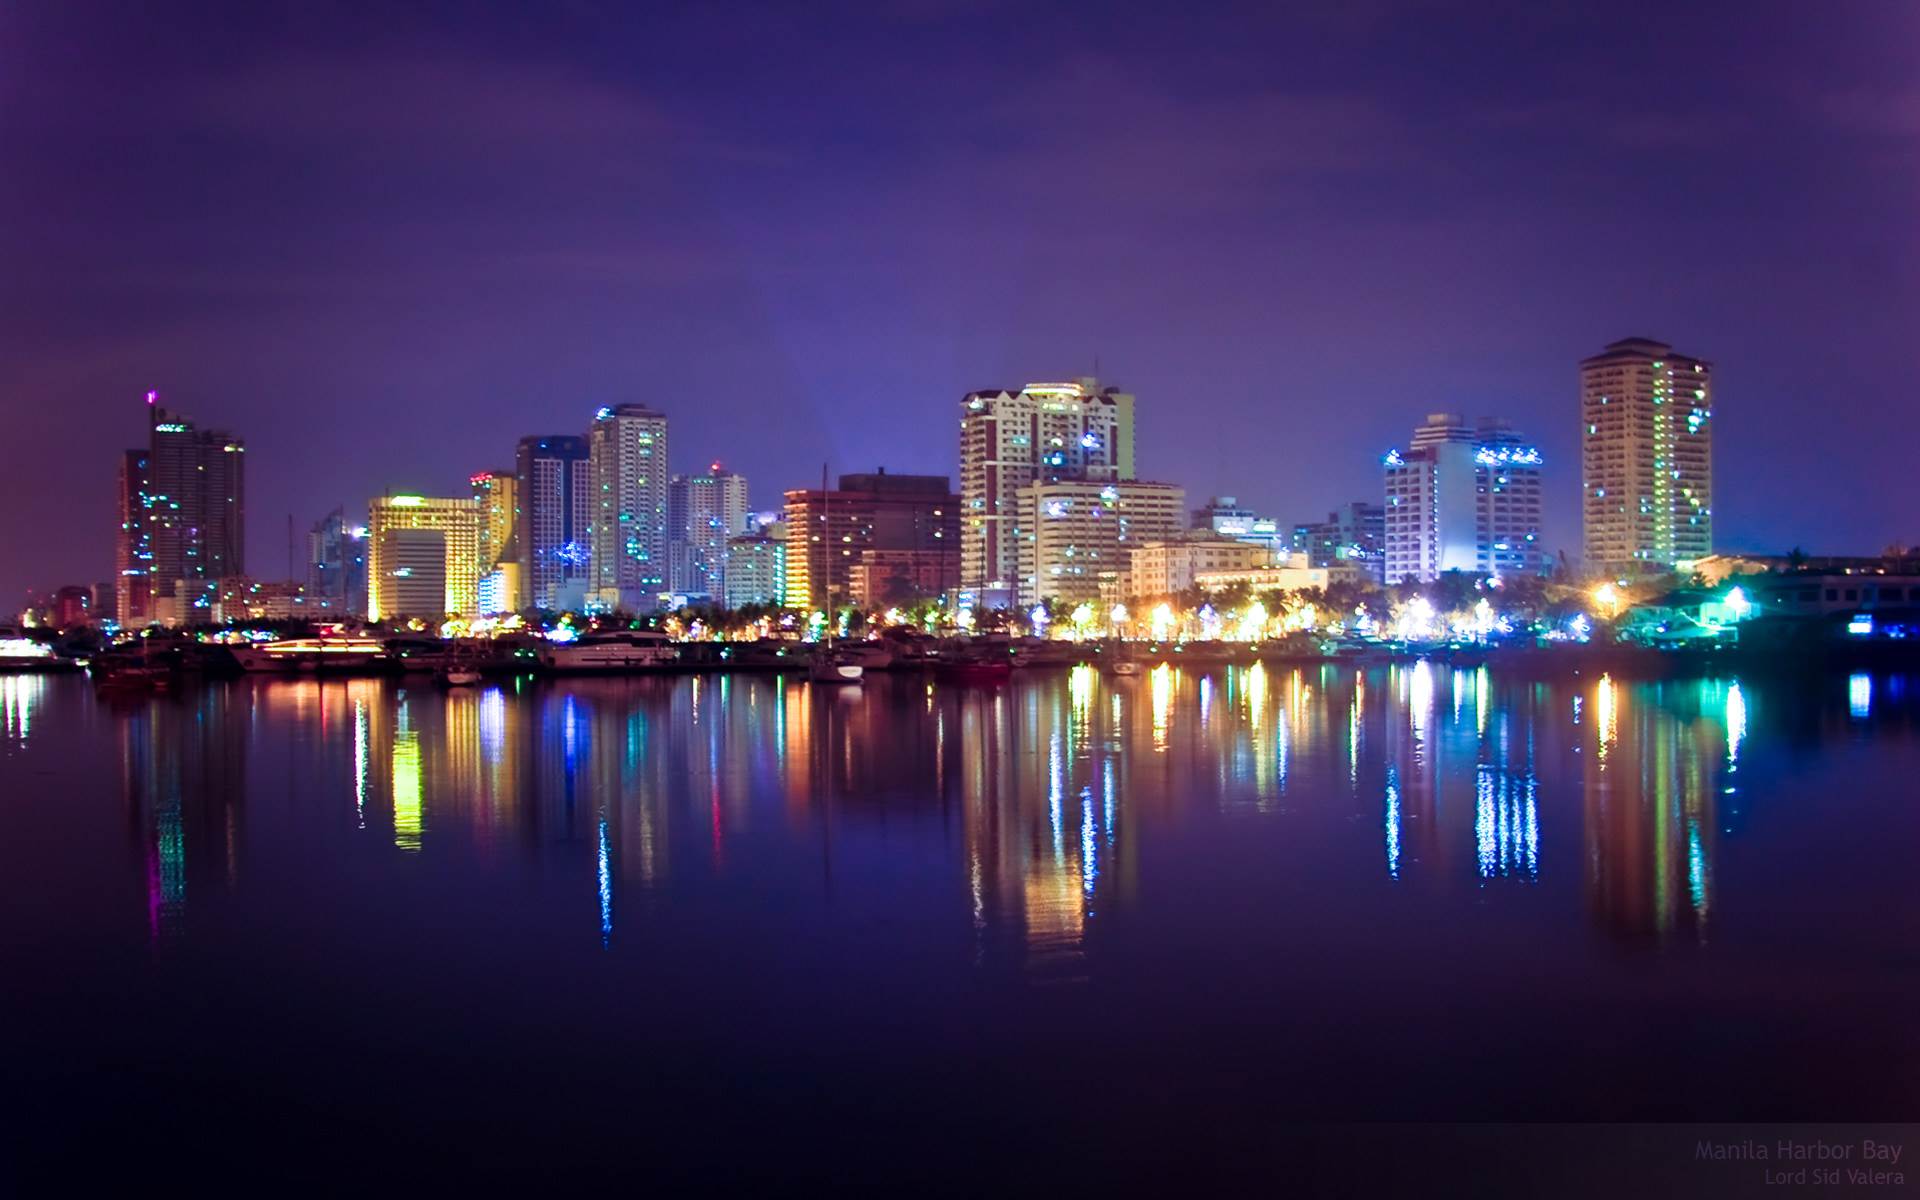 Manila: Still a Bright Spot for Investors in 2014